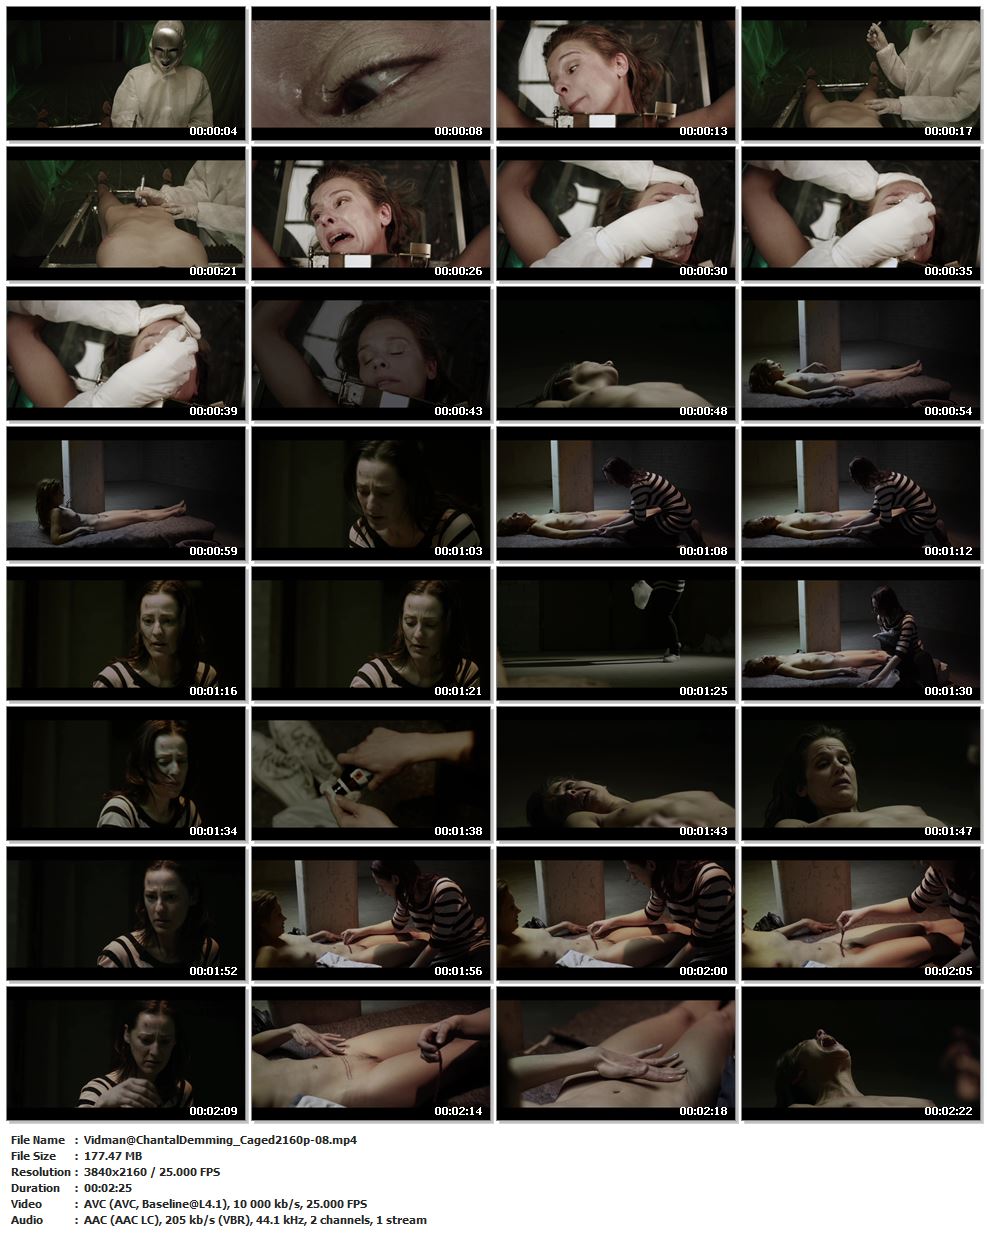 Chantal Demming mental torture in 'Caged' (2011) - Vidman² p